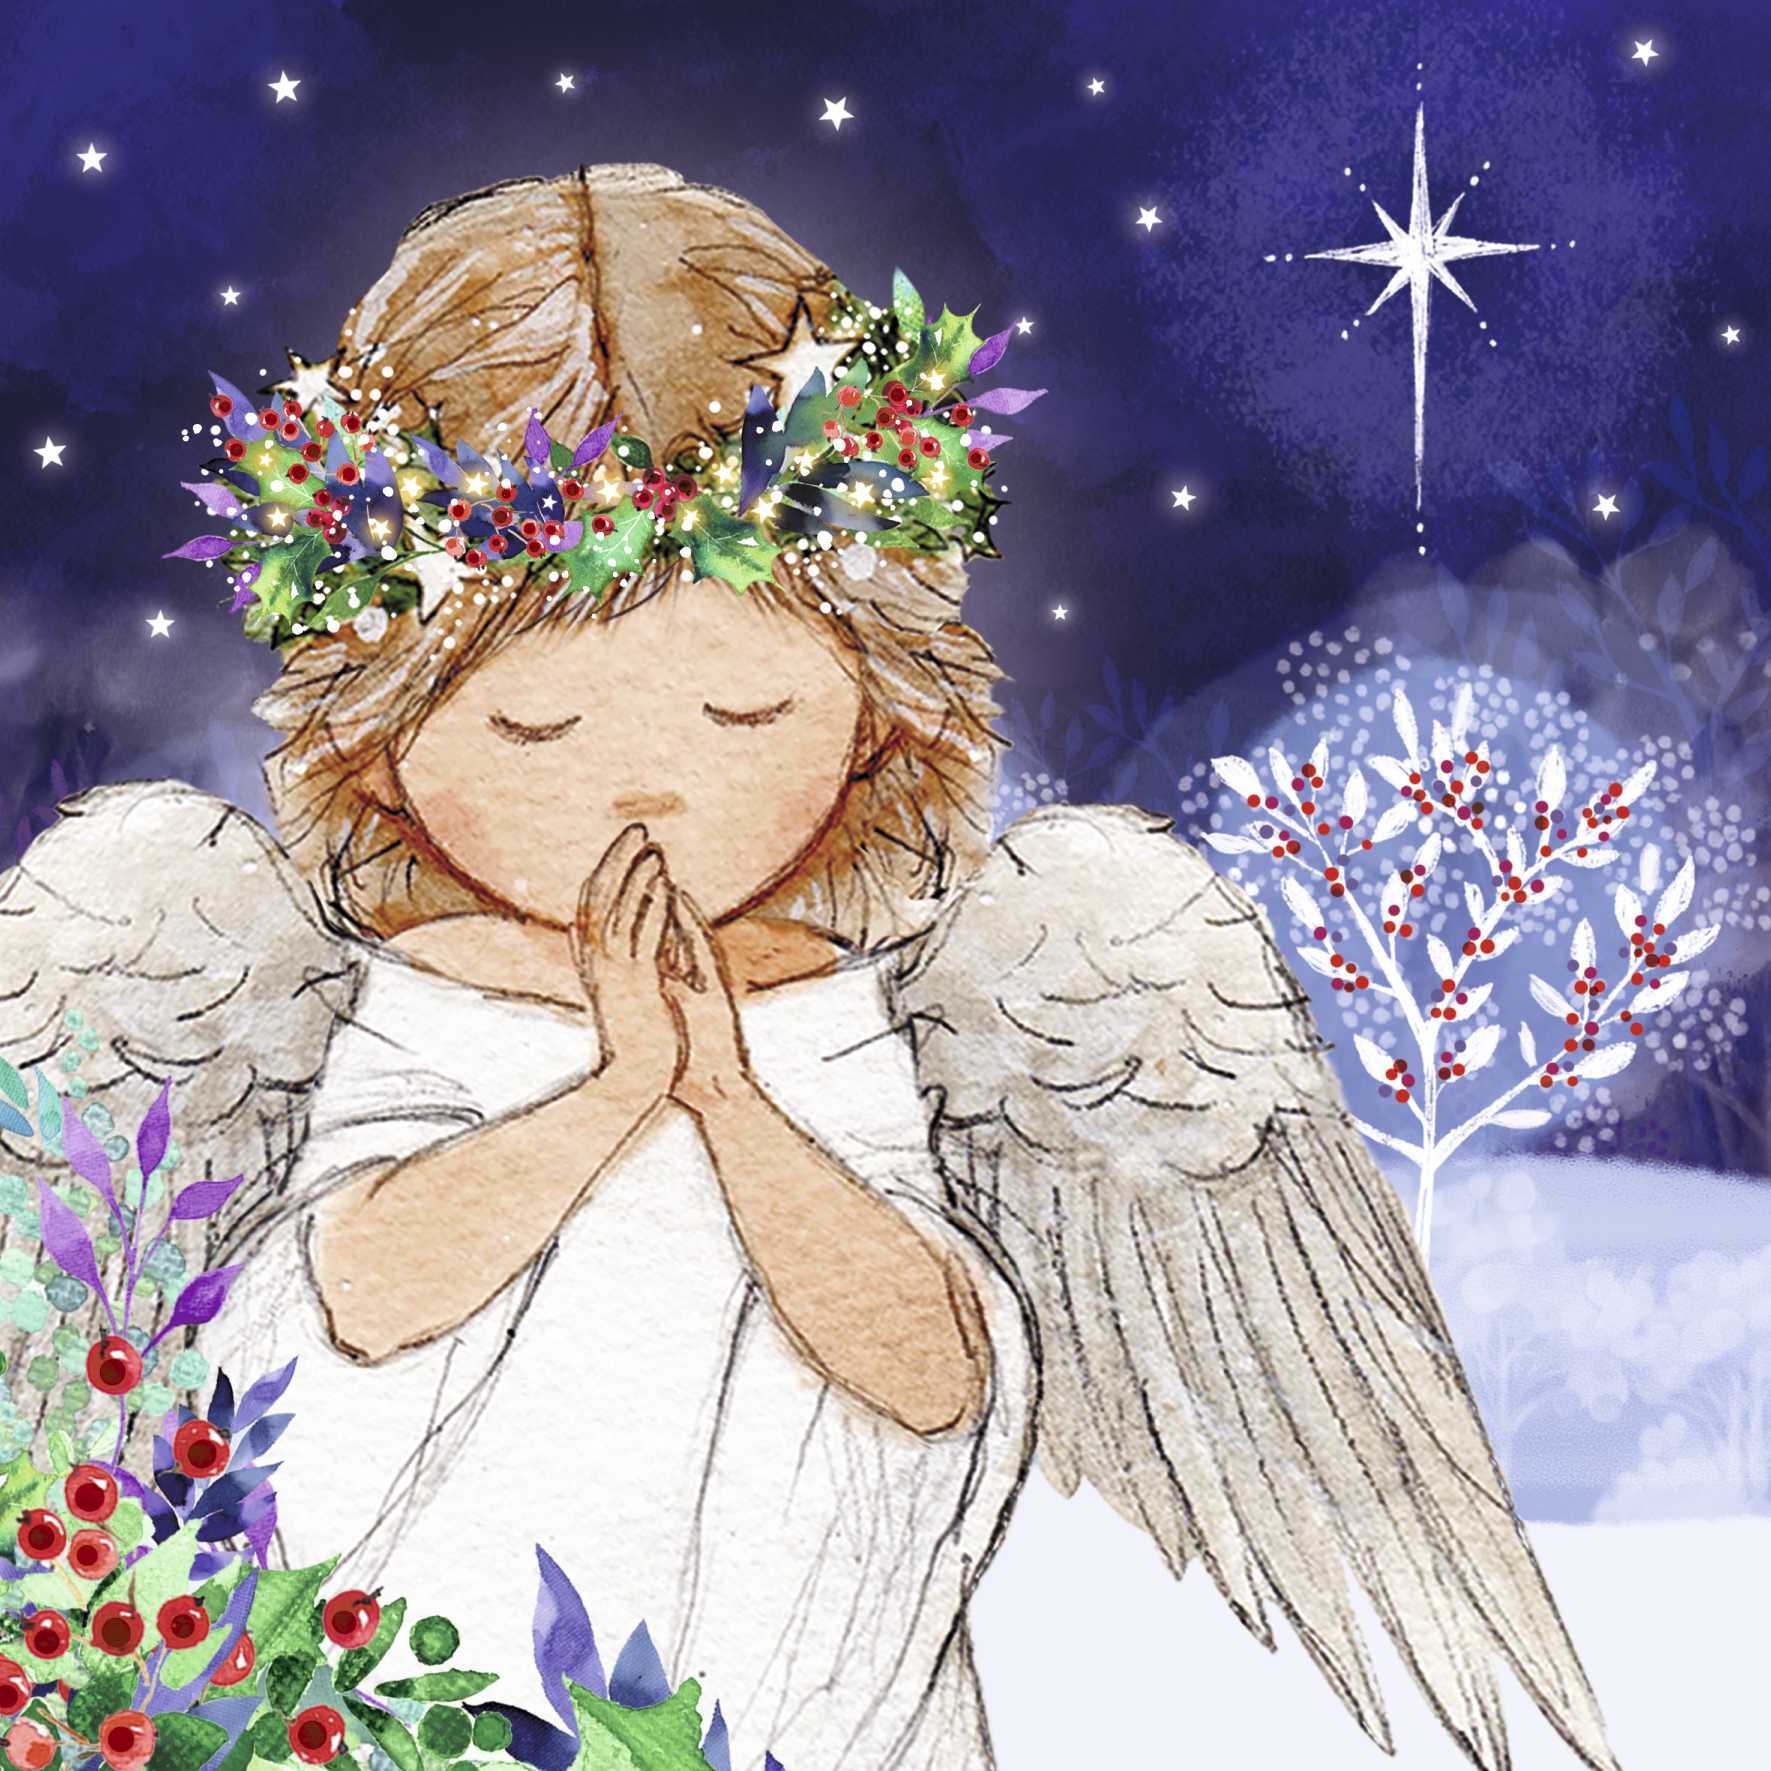 Card 7 - Angel in the Night Sky